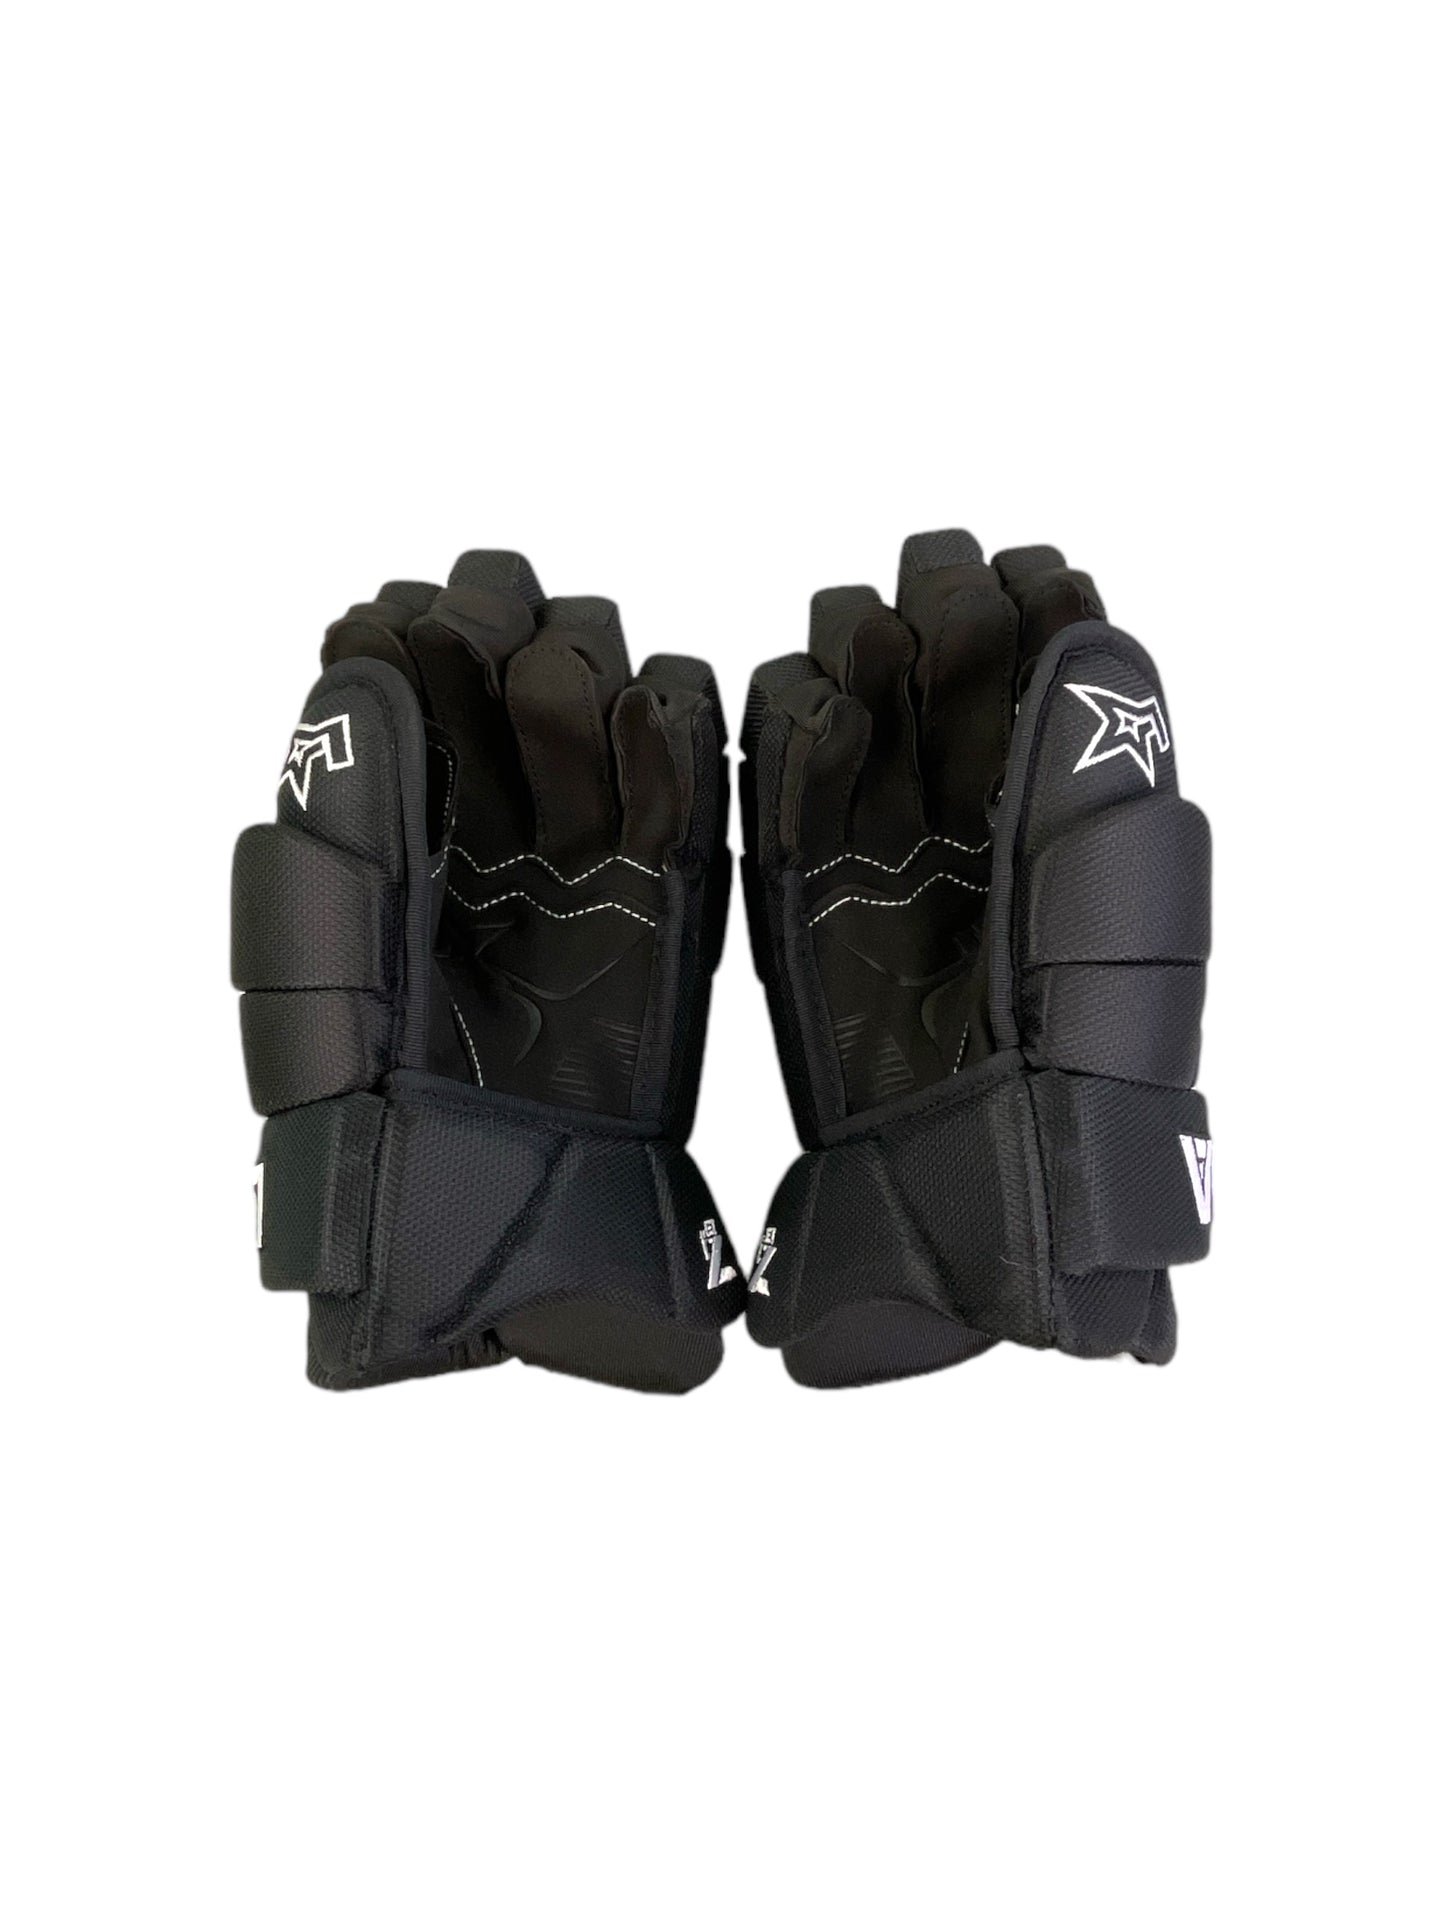 Hockey Glove Pama Pro Series- Black